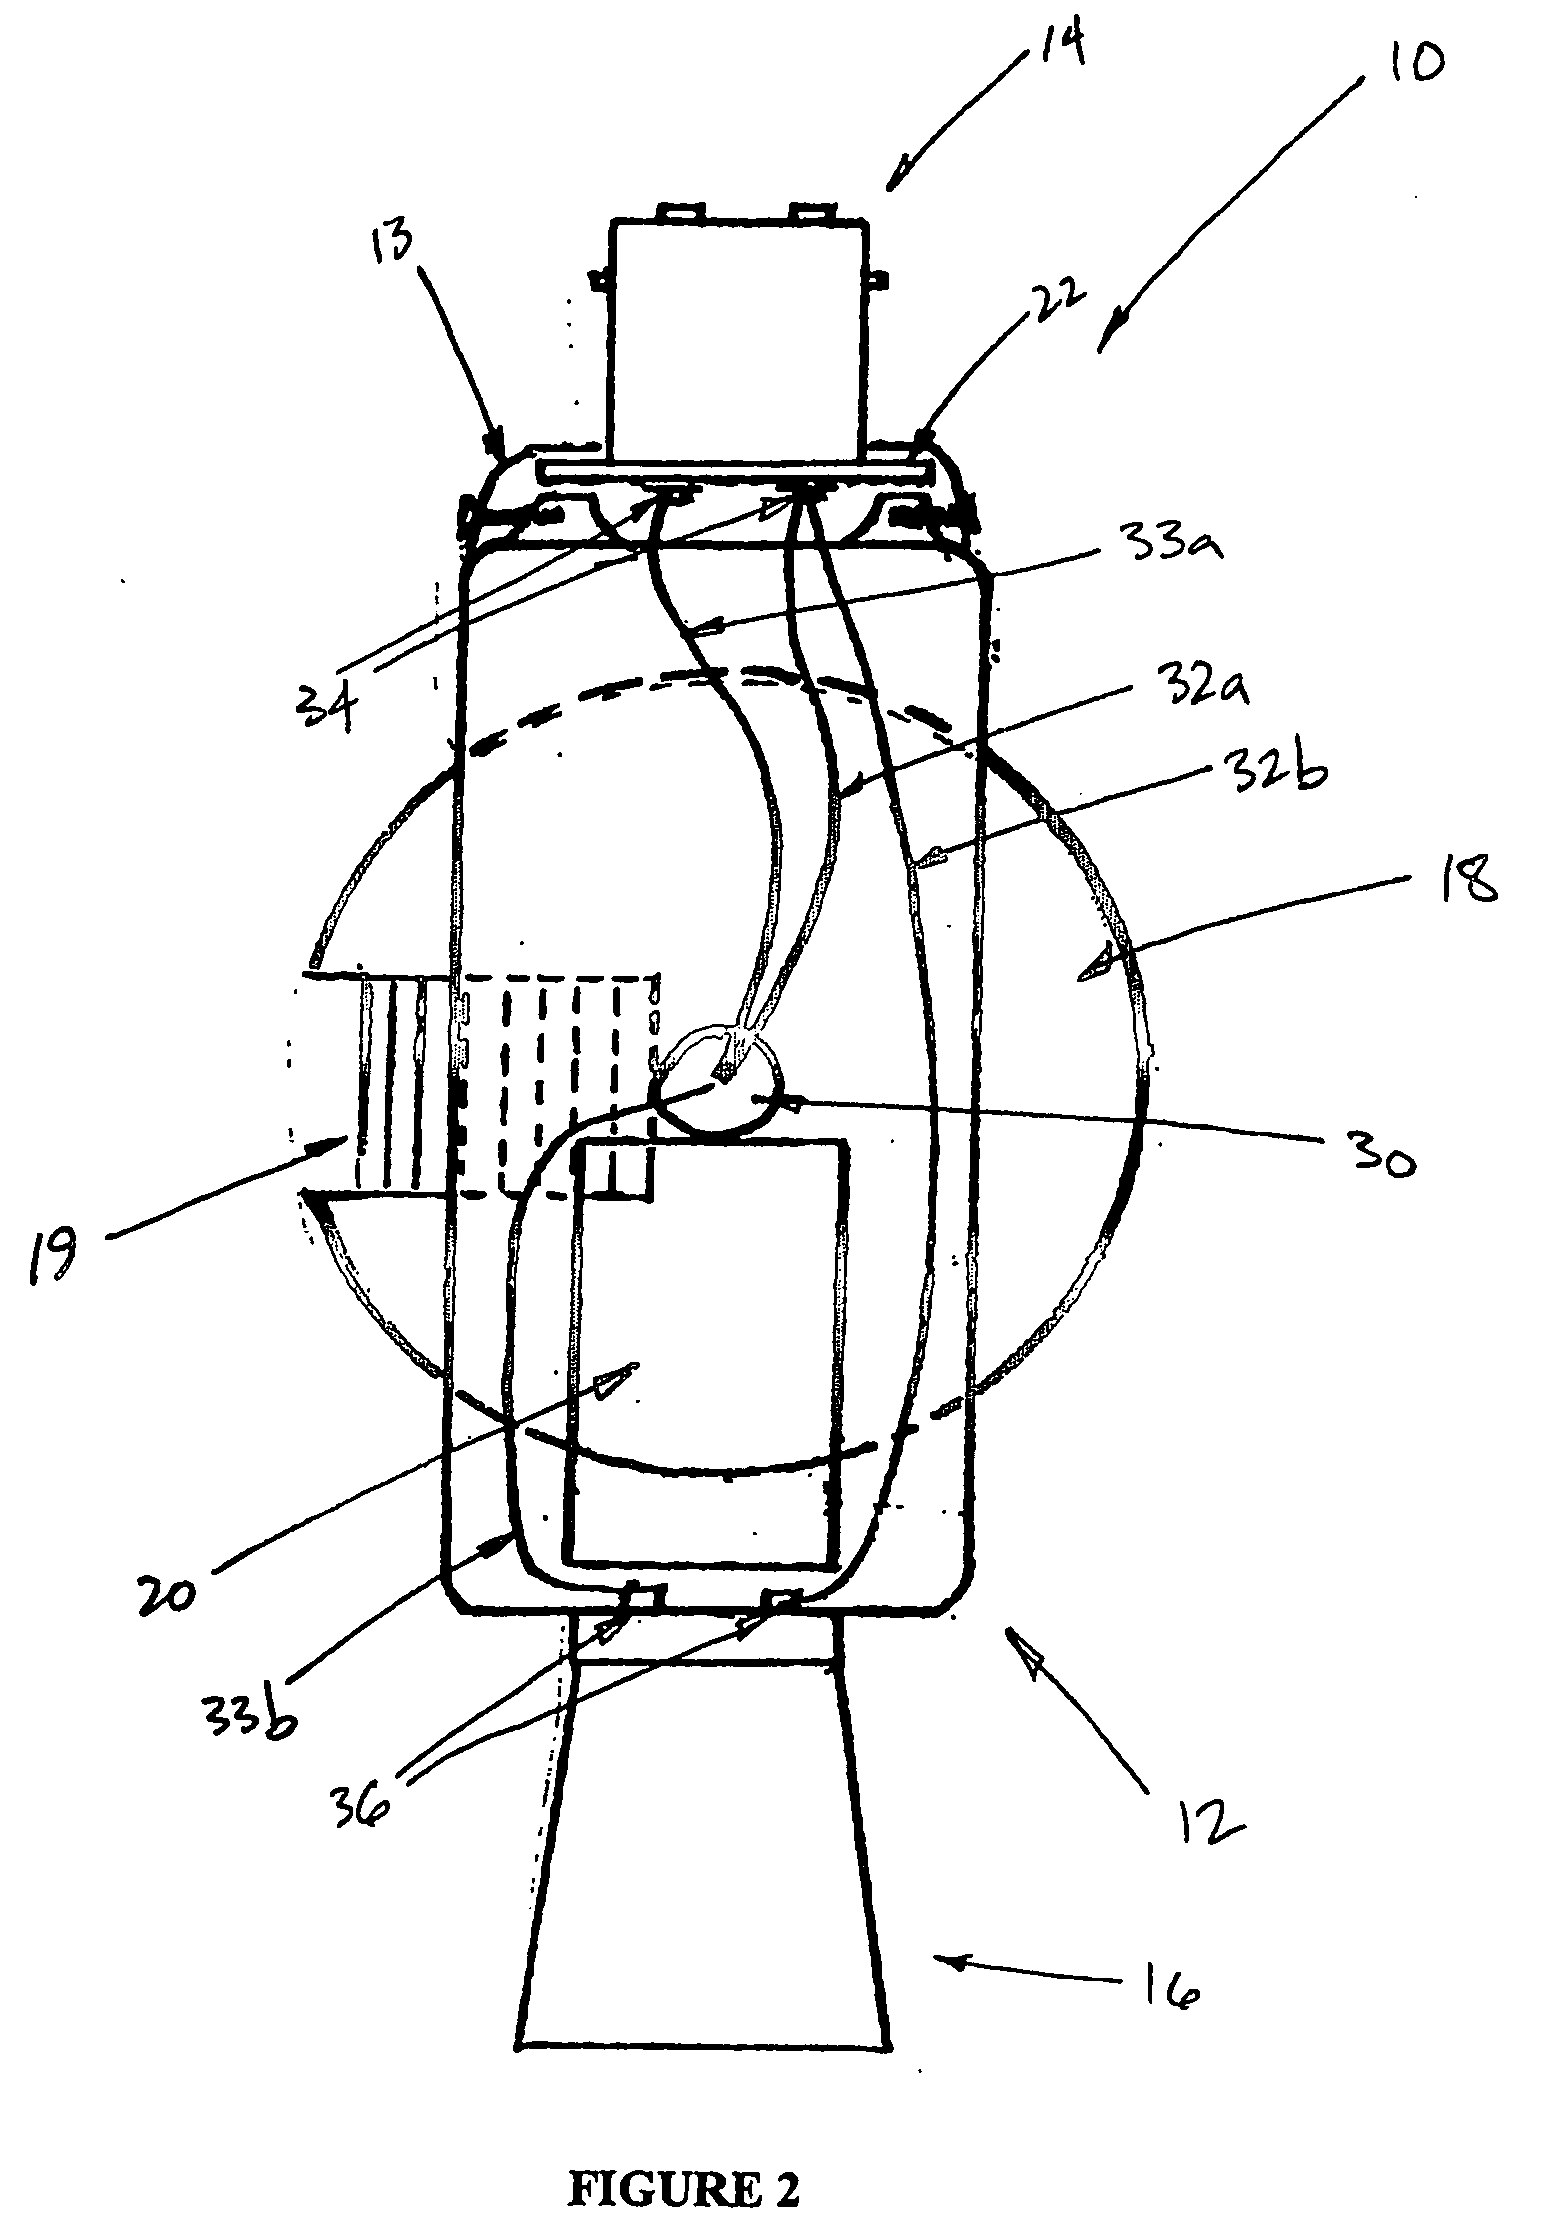 Adaptor with gimbal mounted sensor